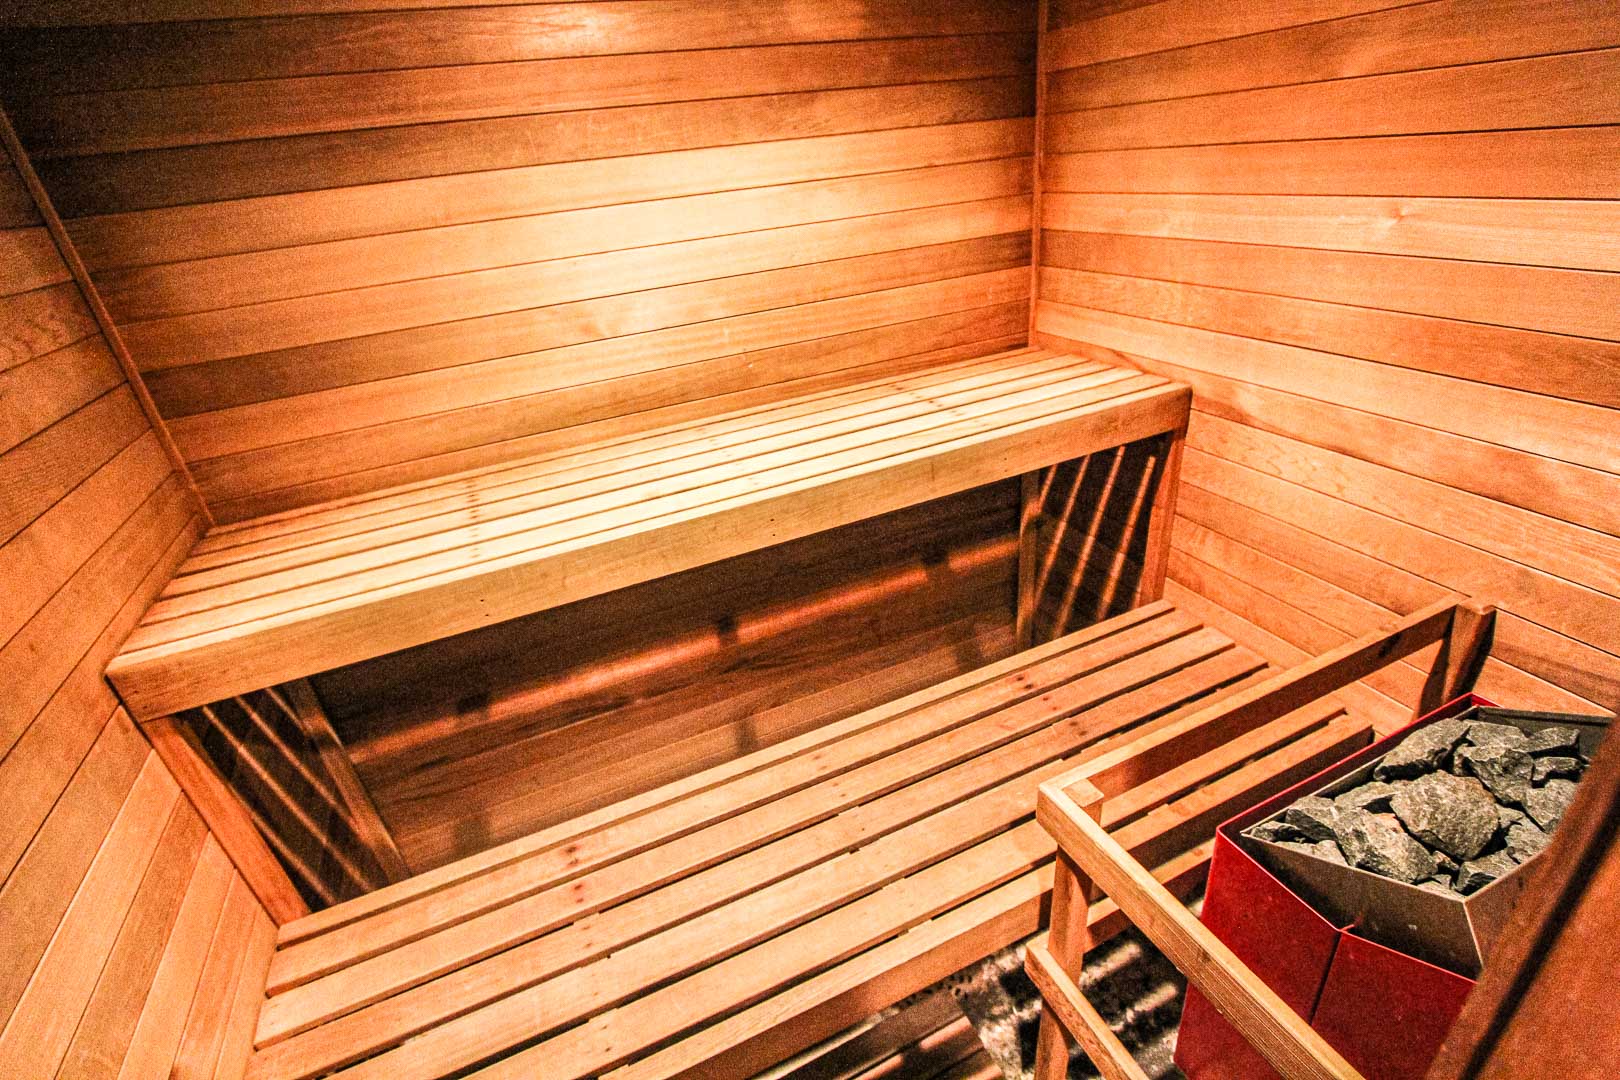 A relaxing sauna room at VRI's Sunburst Resort in Steamboat Springs, Colorado.